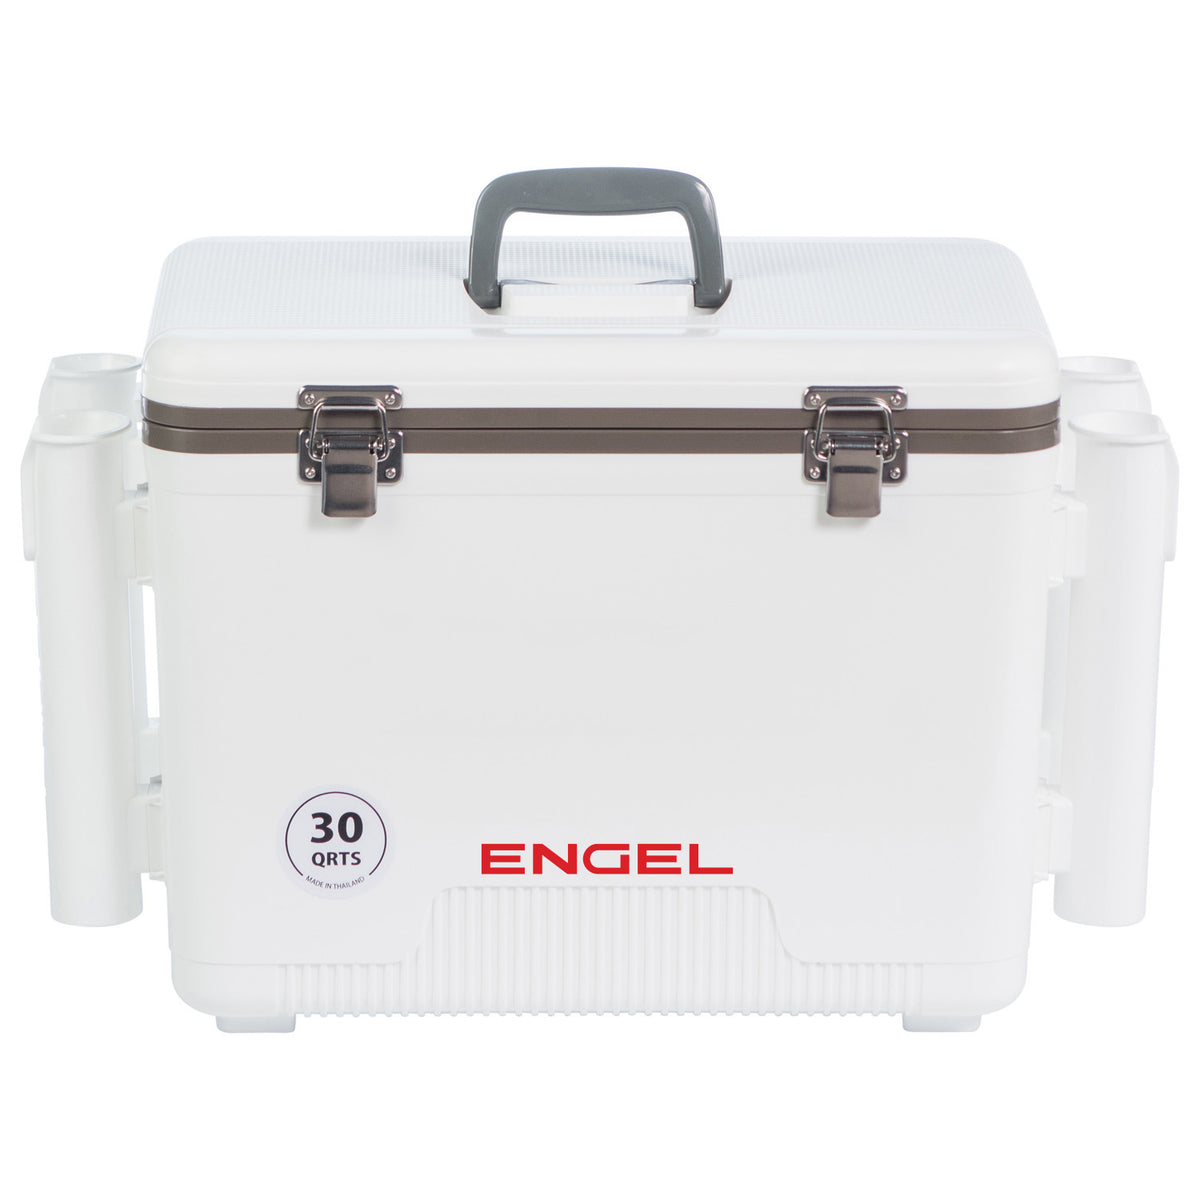 Engel 30 Quart Drybox/Cooler with Rod Holders - White